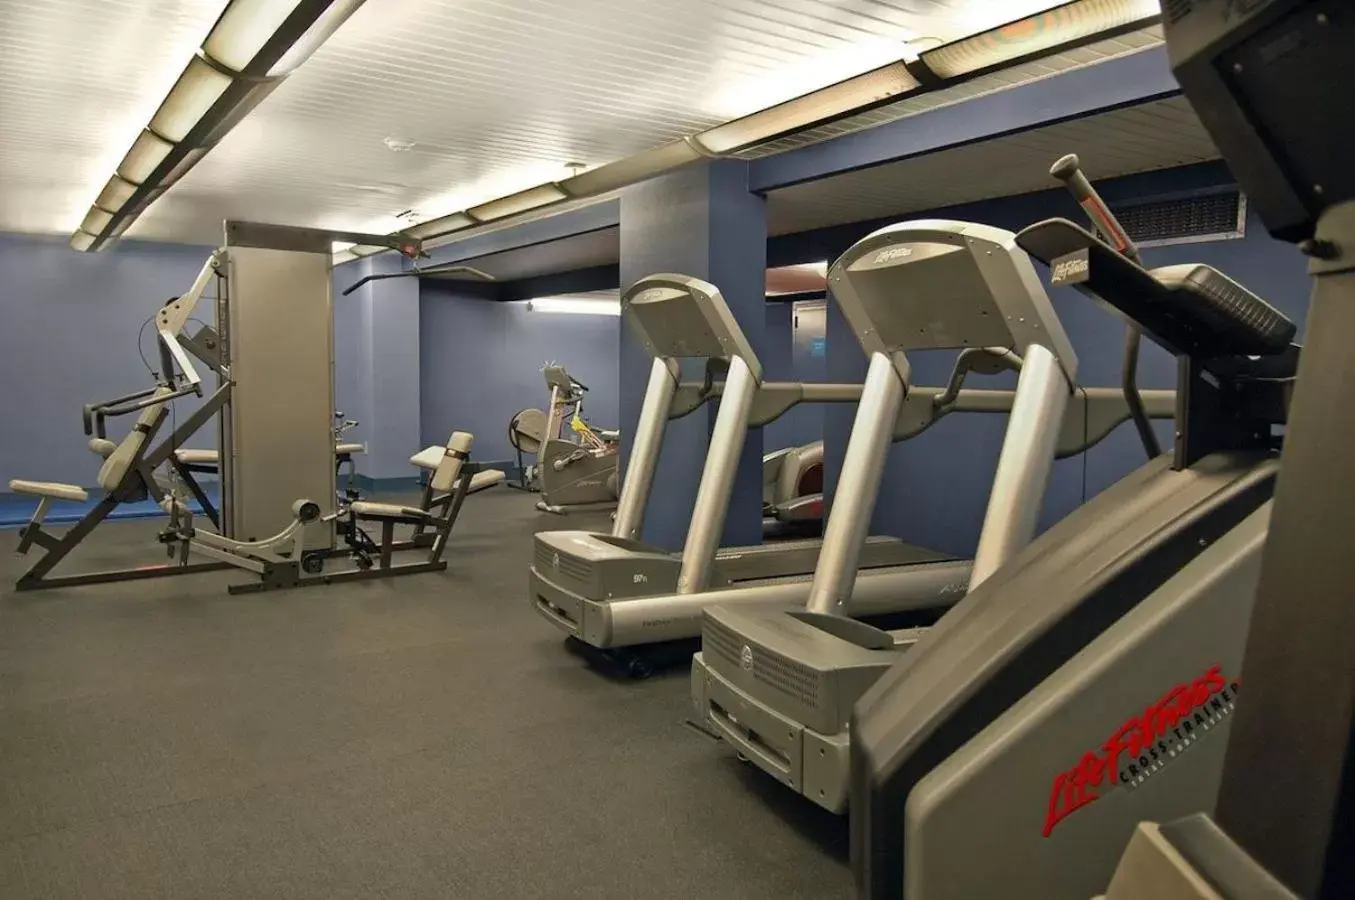 Fitness centre/facilities, Fitness Center/Facilities in Robert Treat Hotel